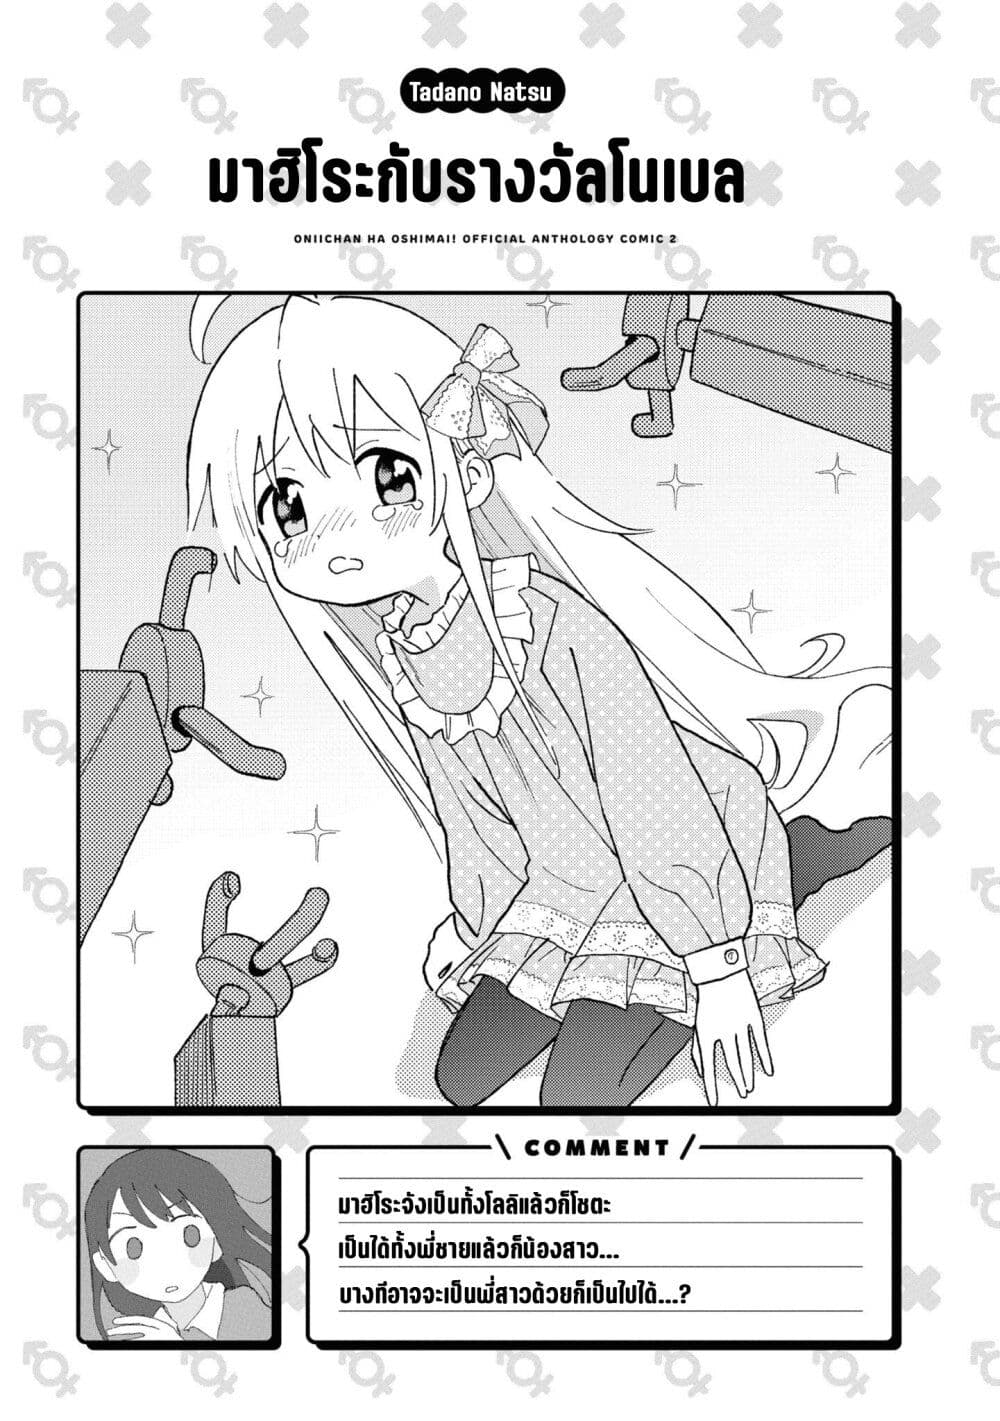 Onii chan wa Oshimai! Koushiki Anthology Comic 18 11